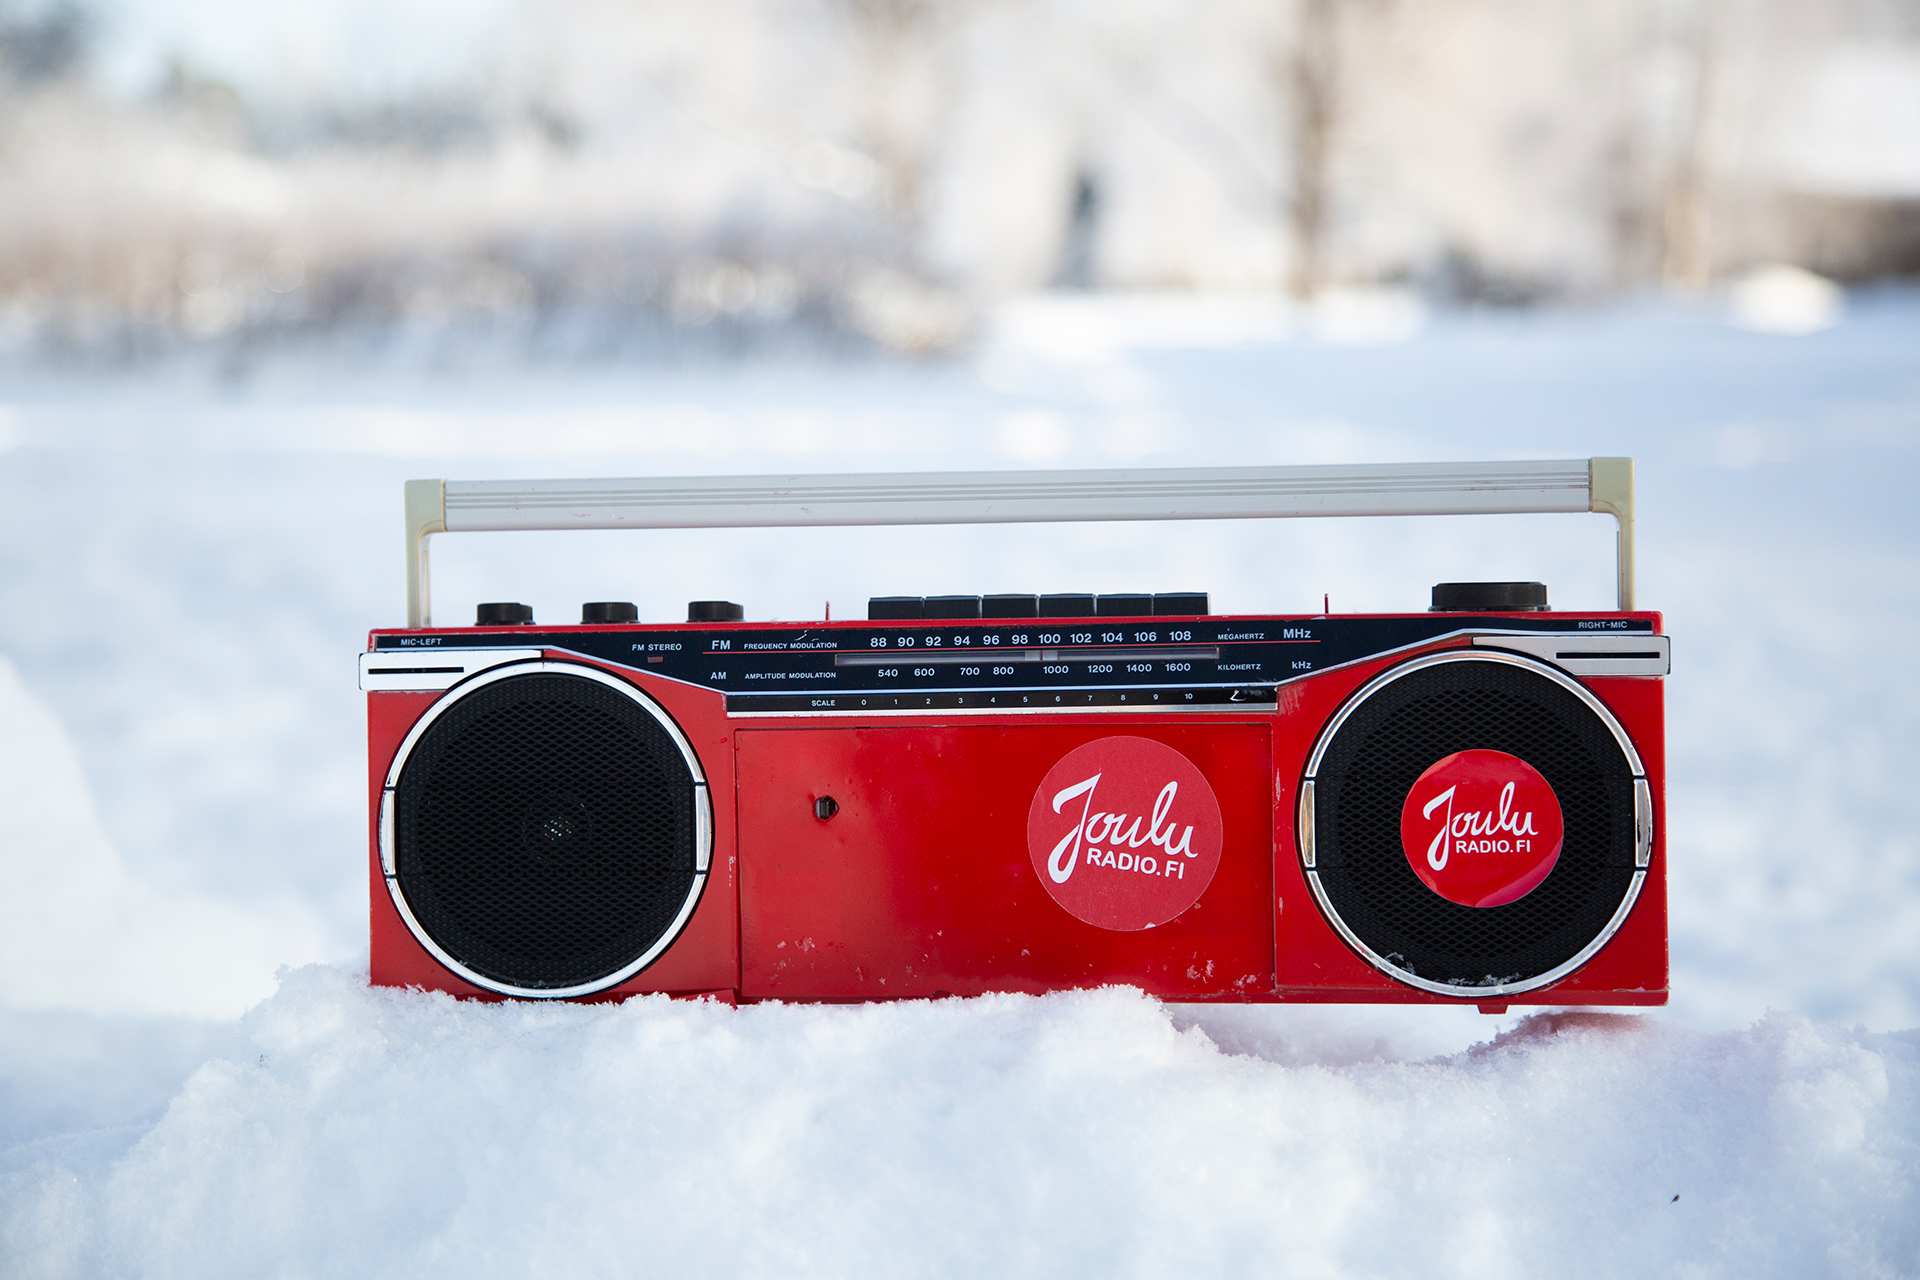 Punainen radio lumihangessa.